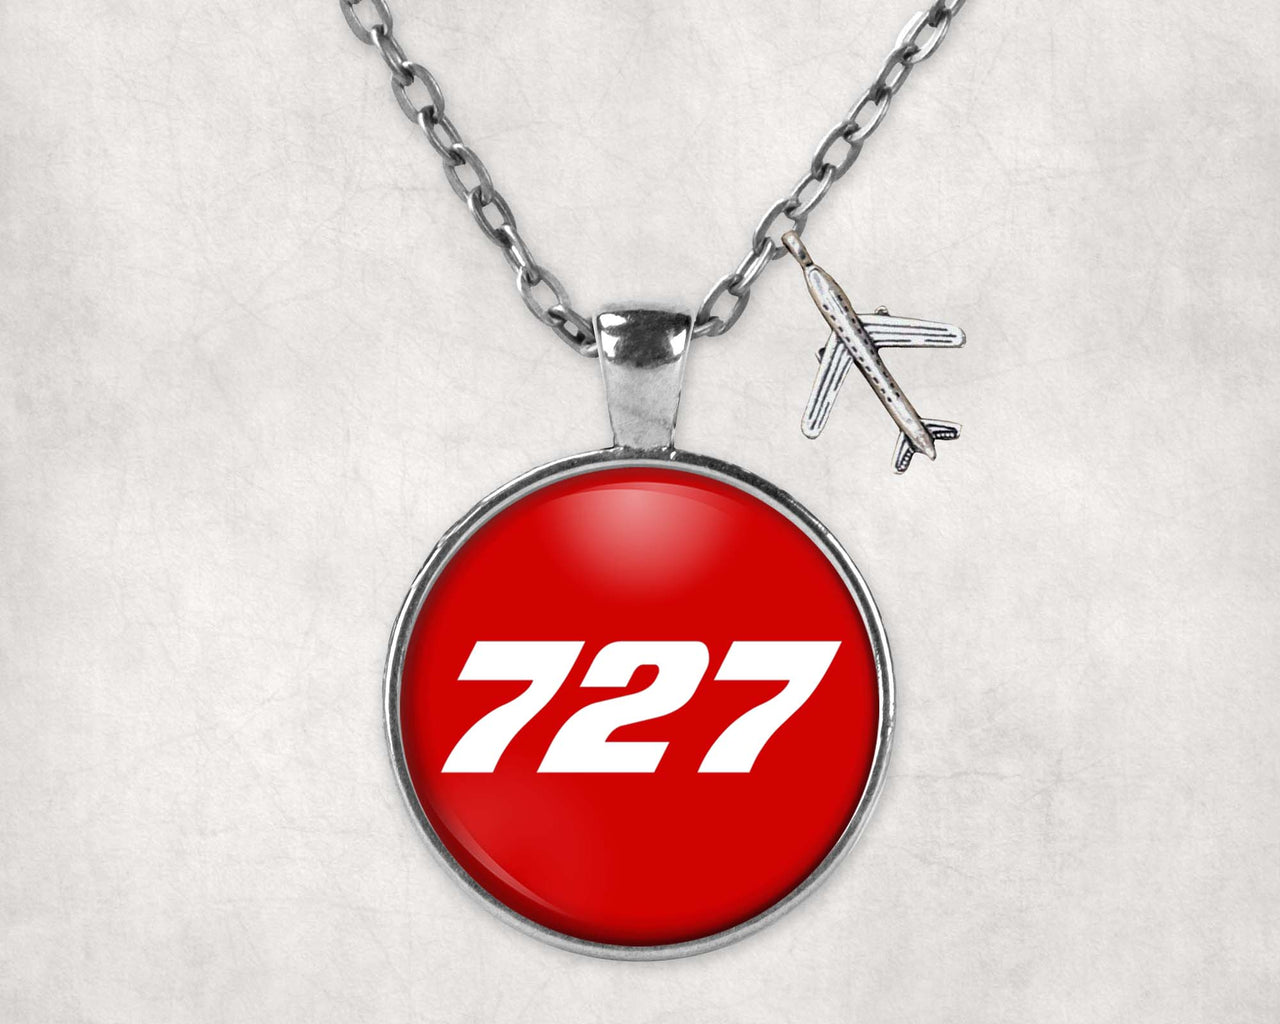 727 Flat Text Designed Necklaces